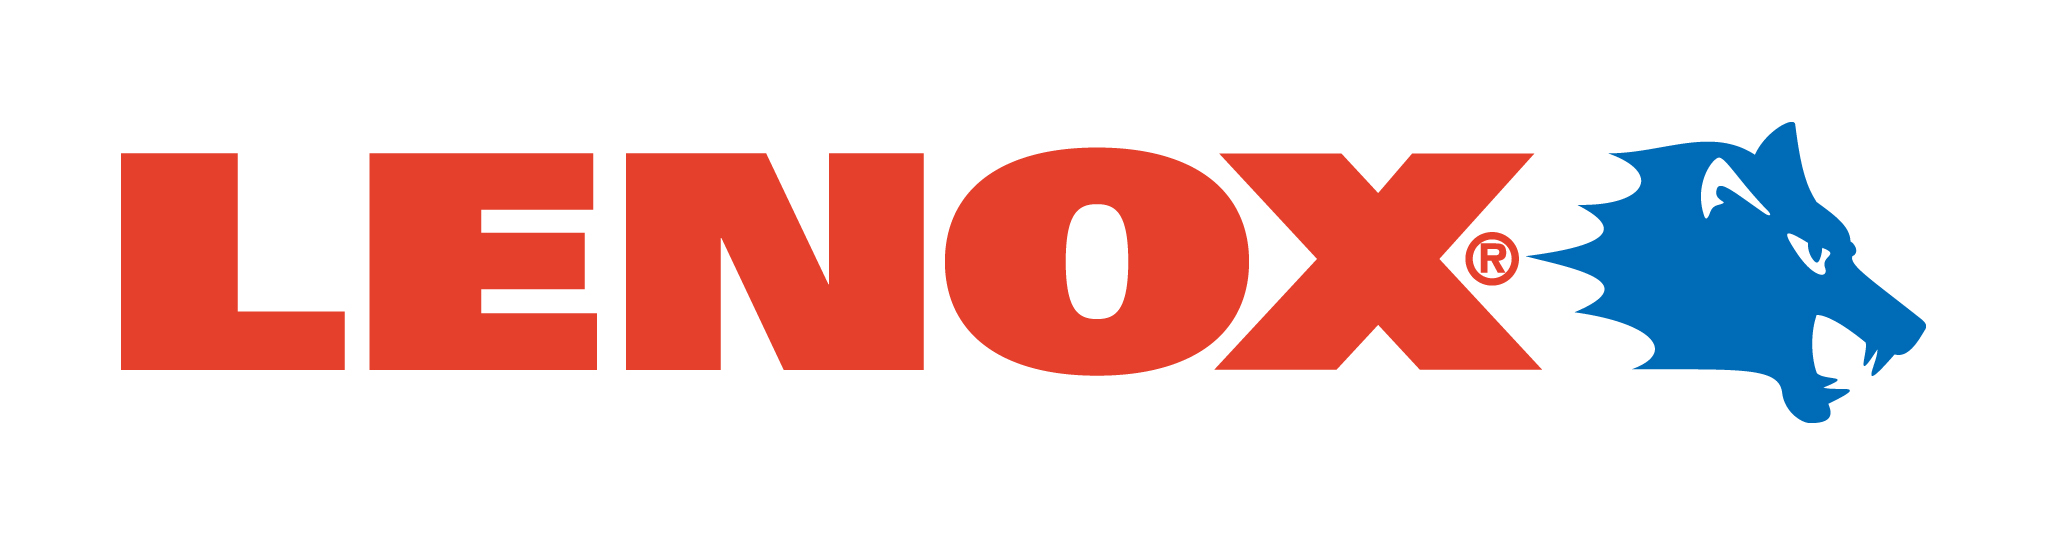 Lenox Brand Logo